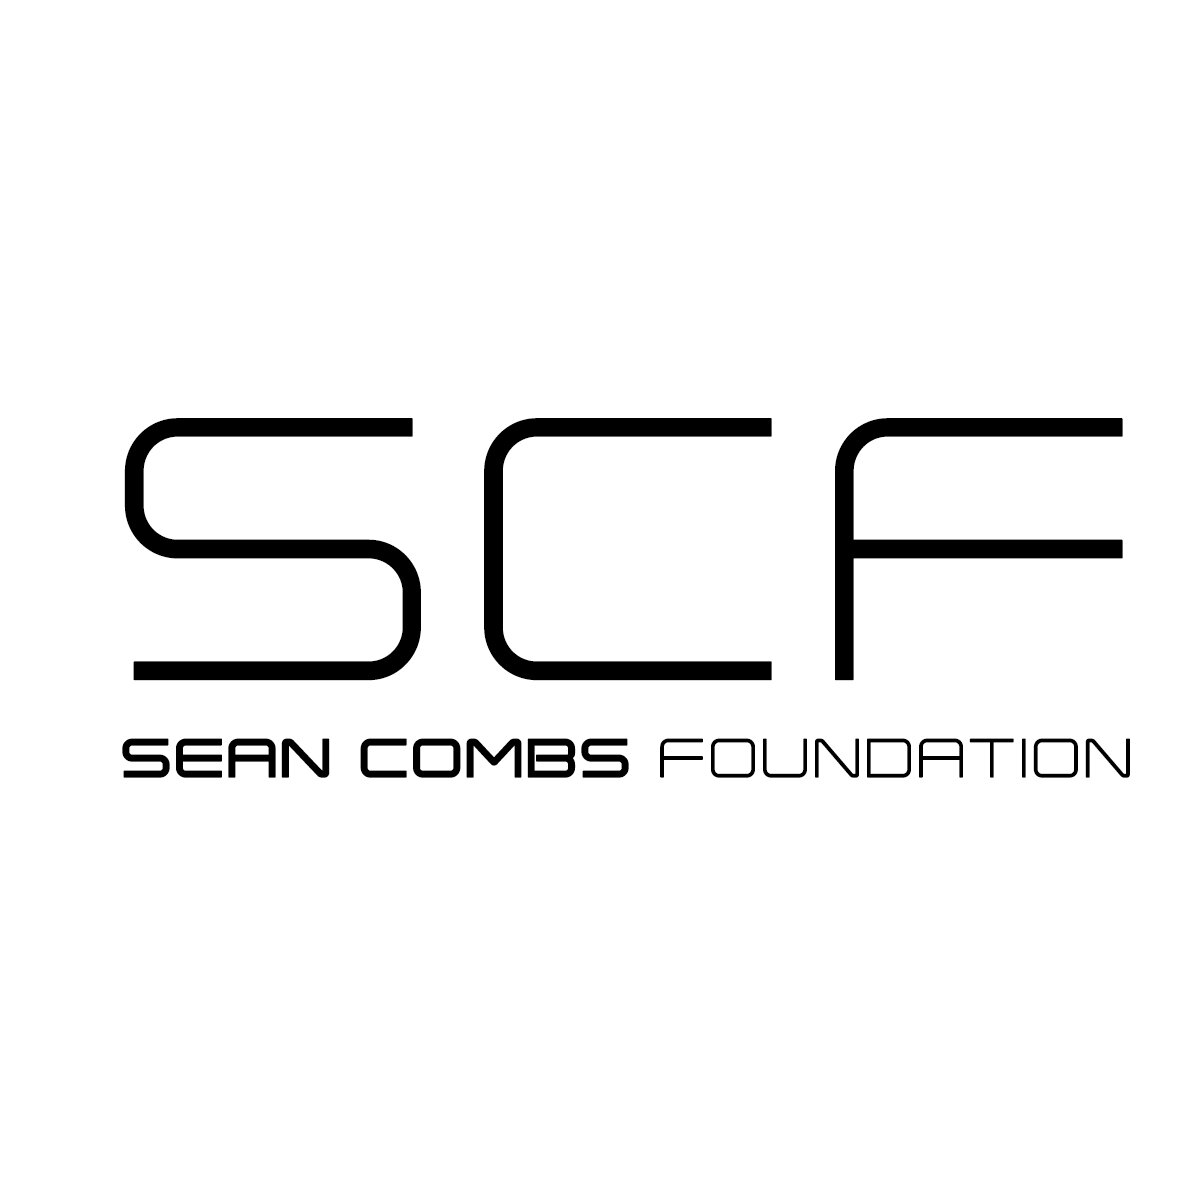 scf logo.jpg